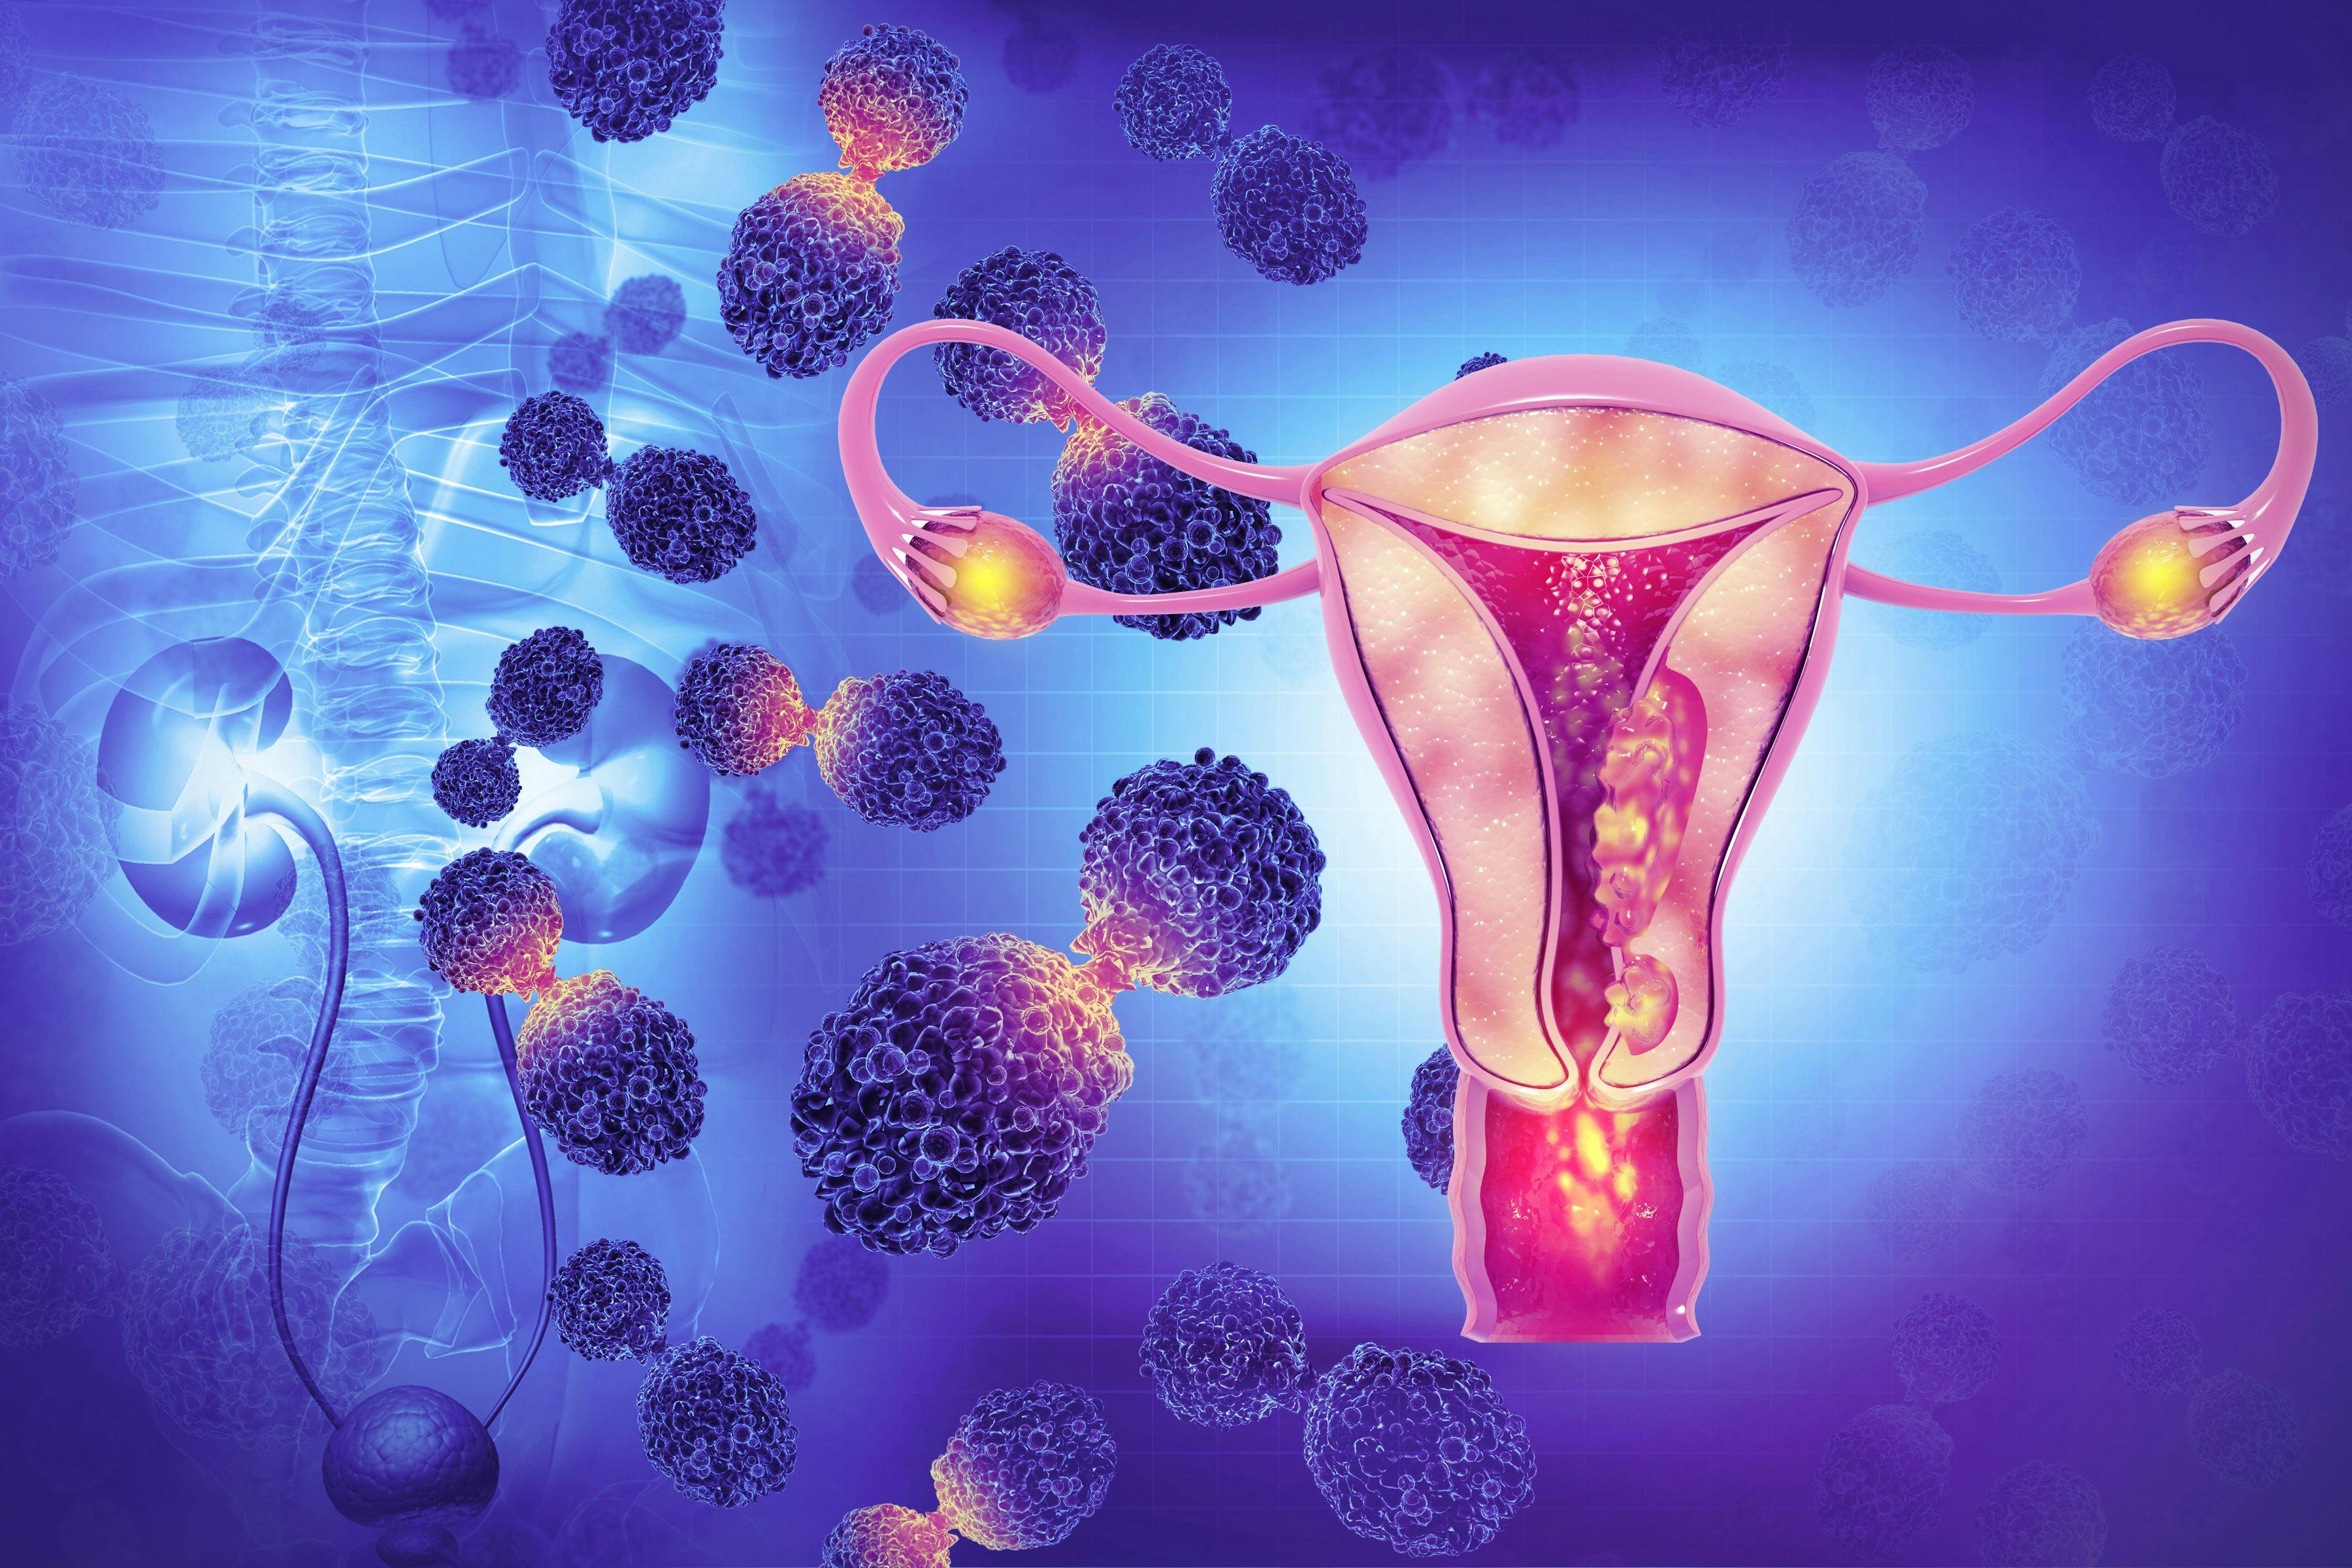 Ovarian cancer illustration | Image credit: Chrystal light - stock.adobe.com